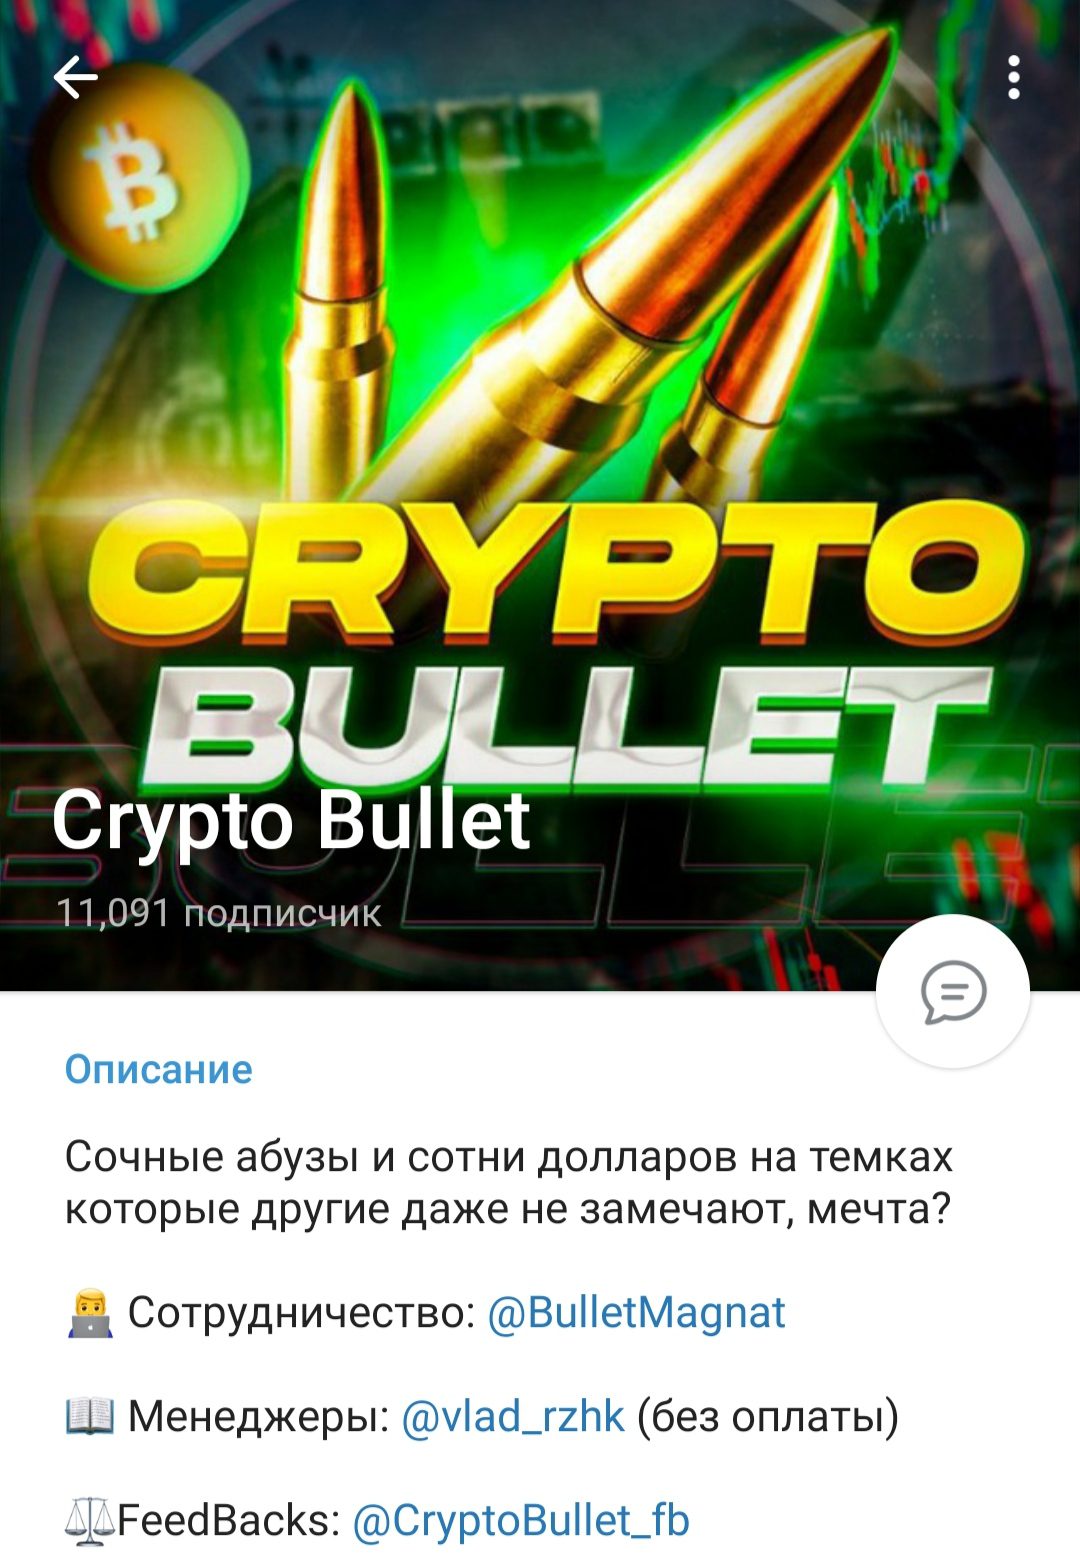 Crypto Bullet телеграмм